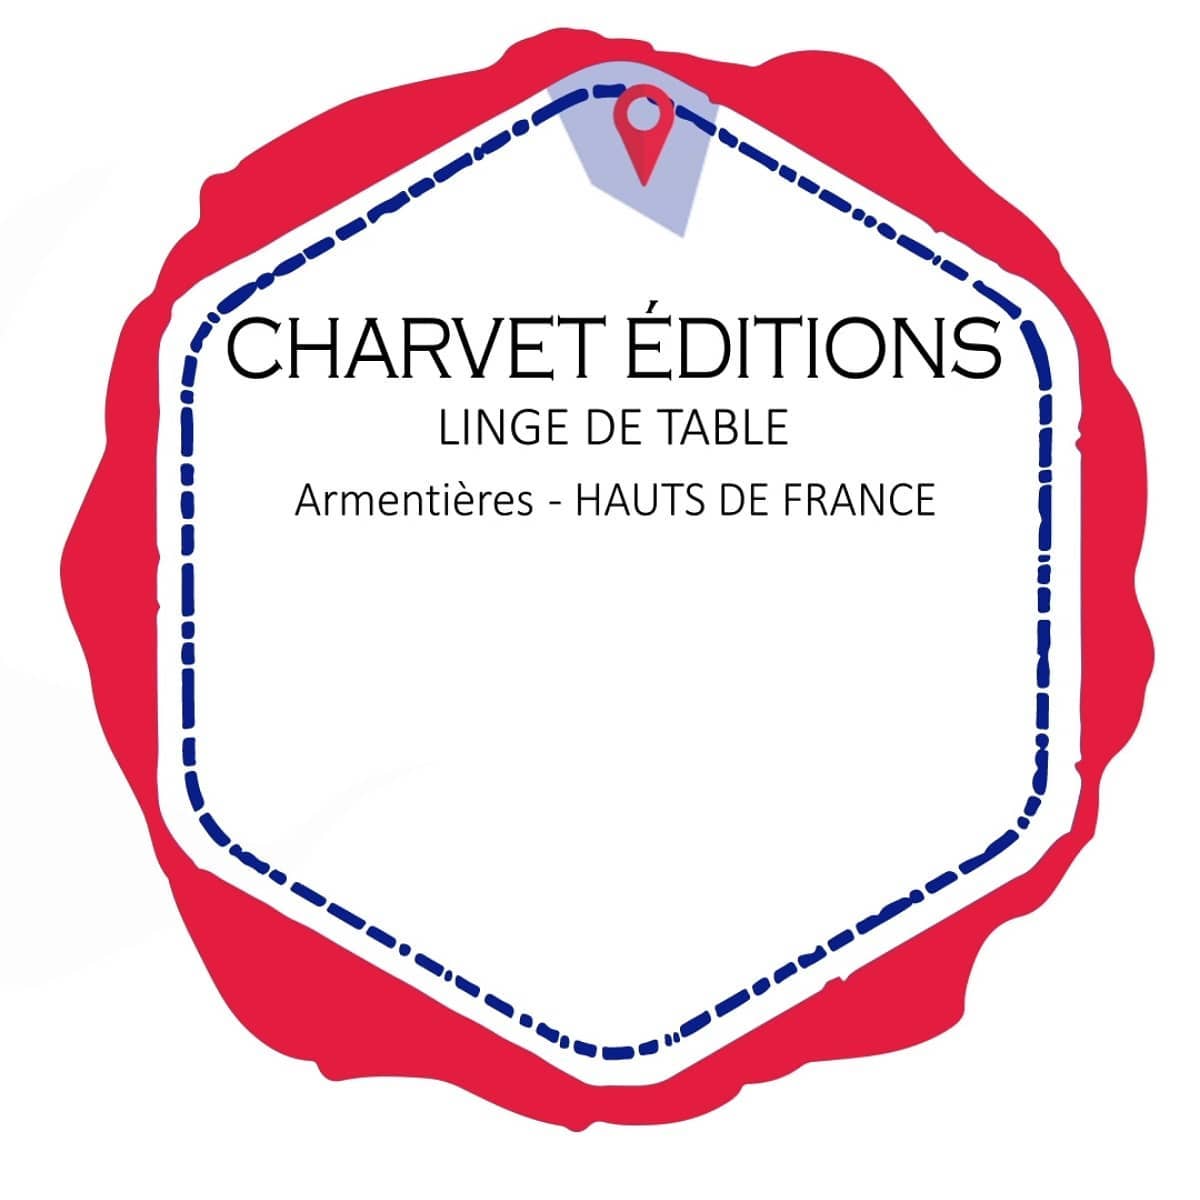 CHARVET EDITIONS, nappes et torchons en lin made in France